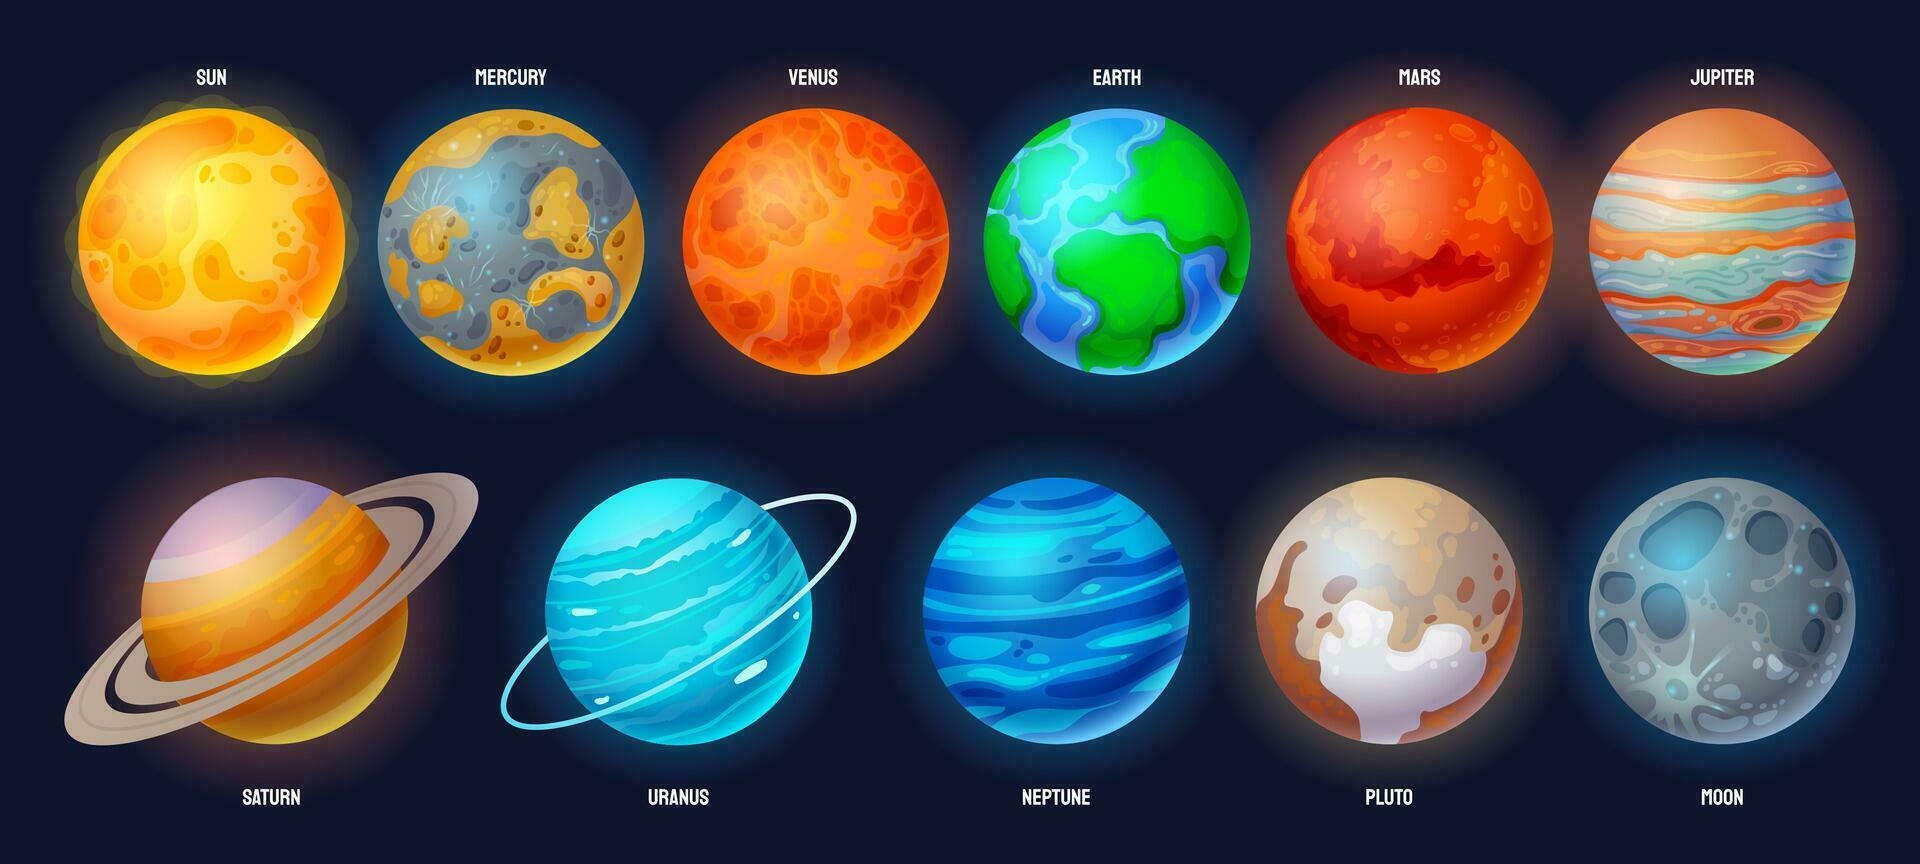 Cartoon solar system planets. Astronomy set with Sun, Mercury, Venus, Earth, Mars, Jupiter, Saturn, Uranus, Neptune, Pluto and Moon vector illustration set